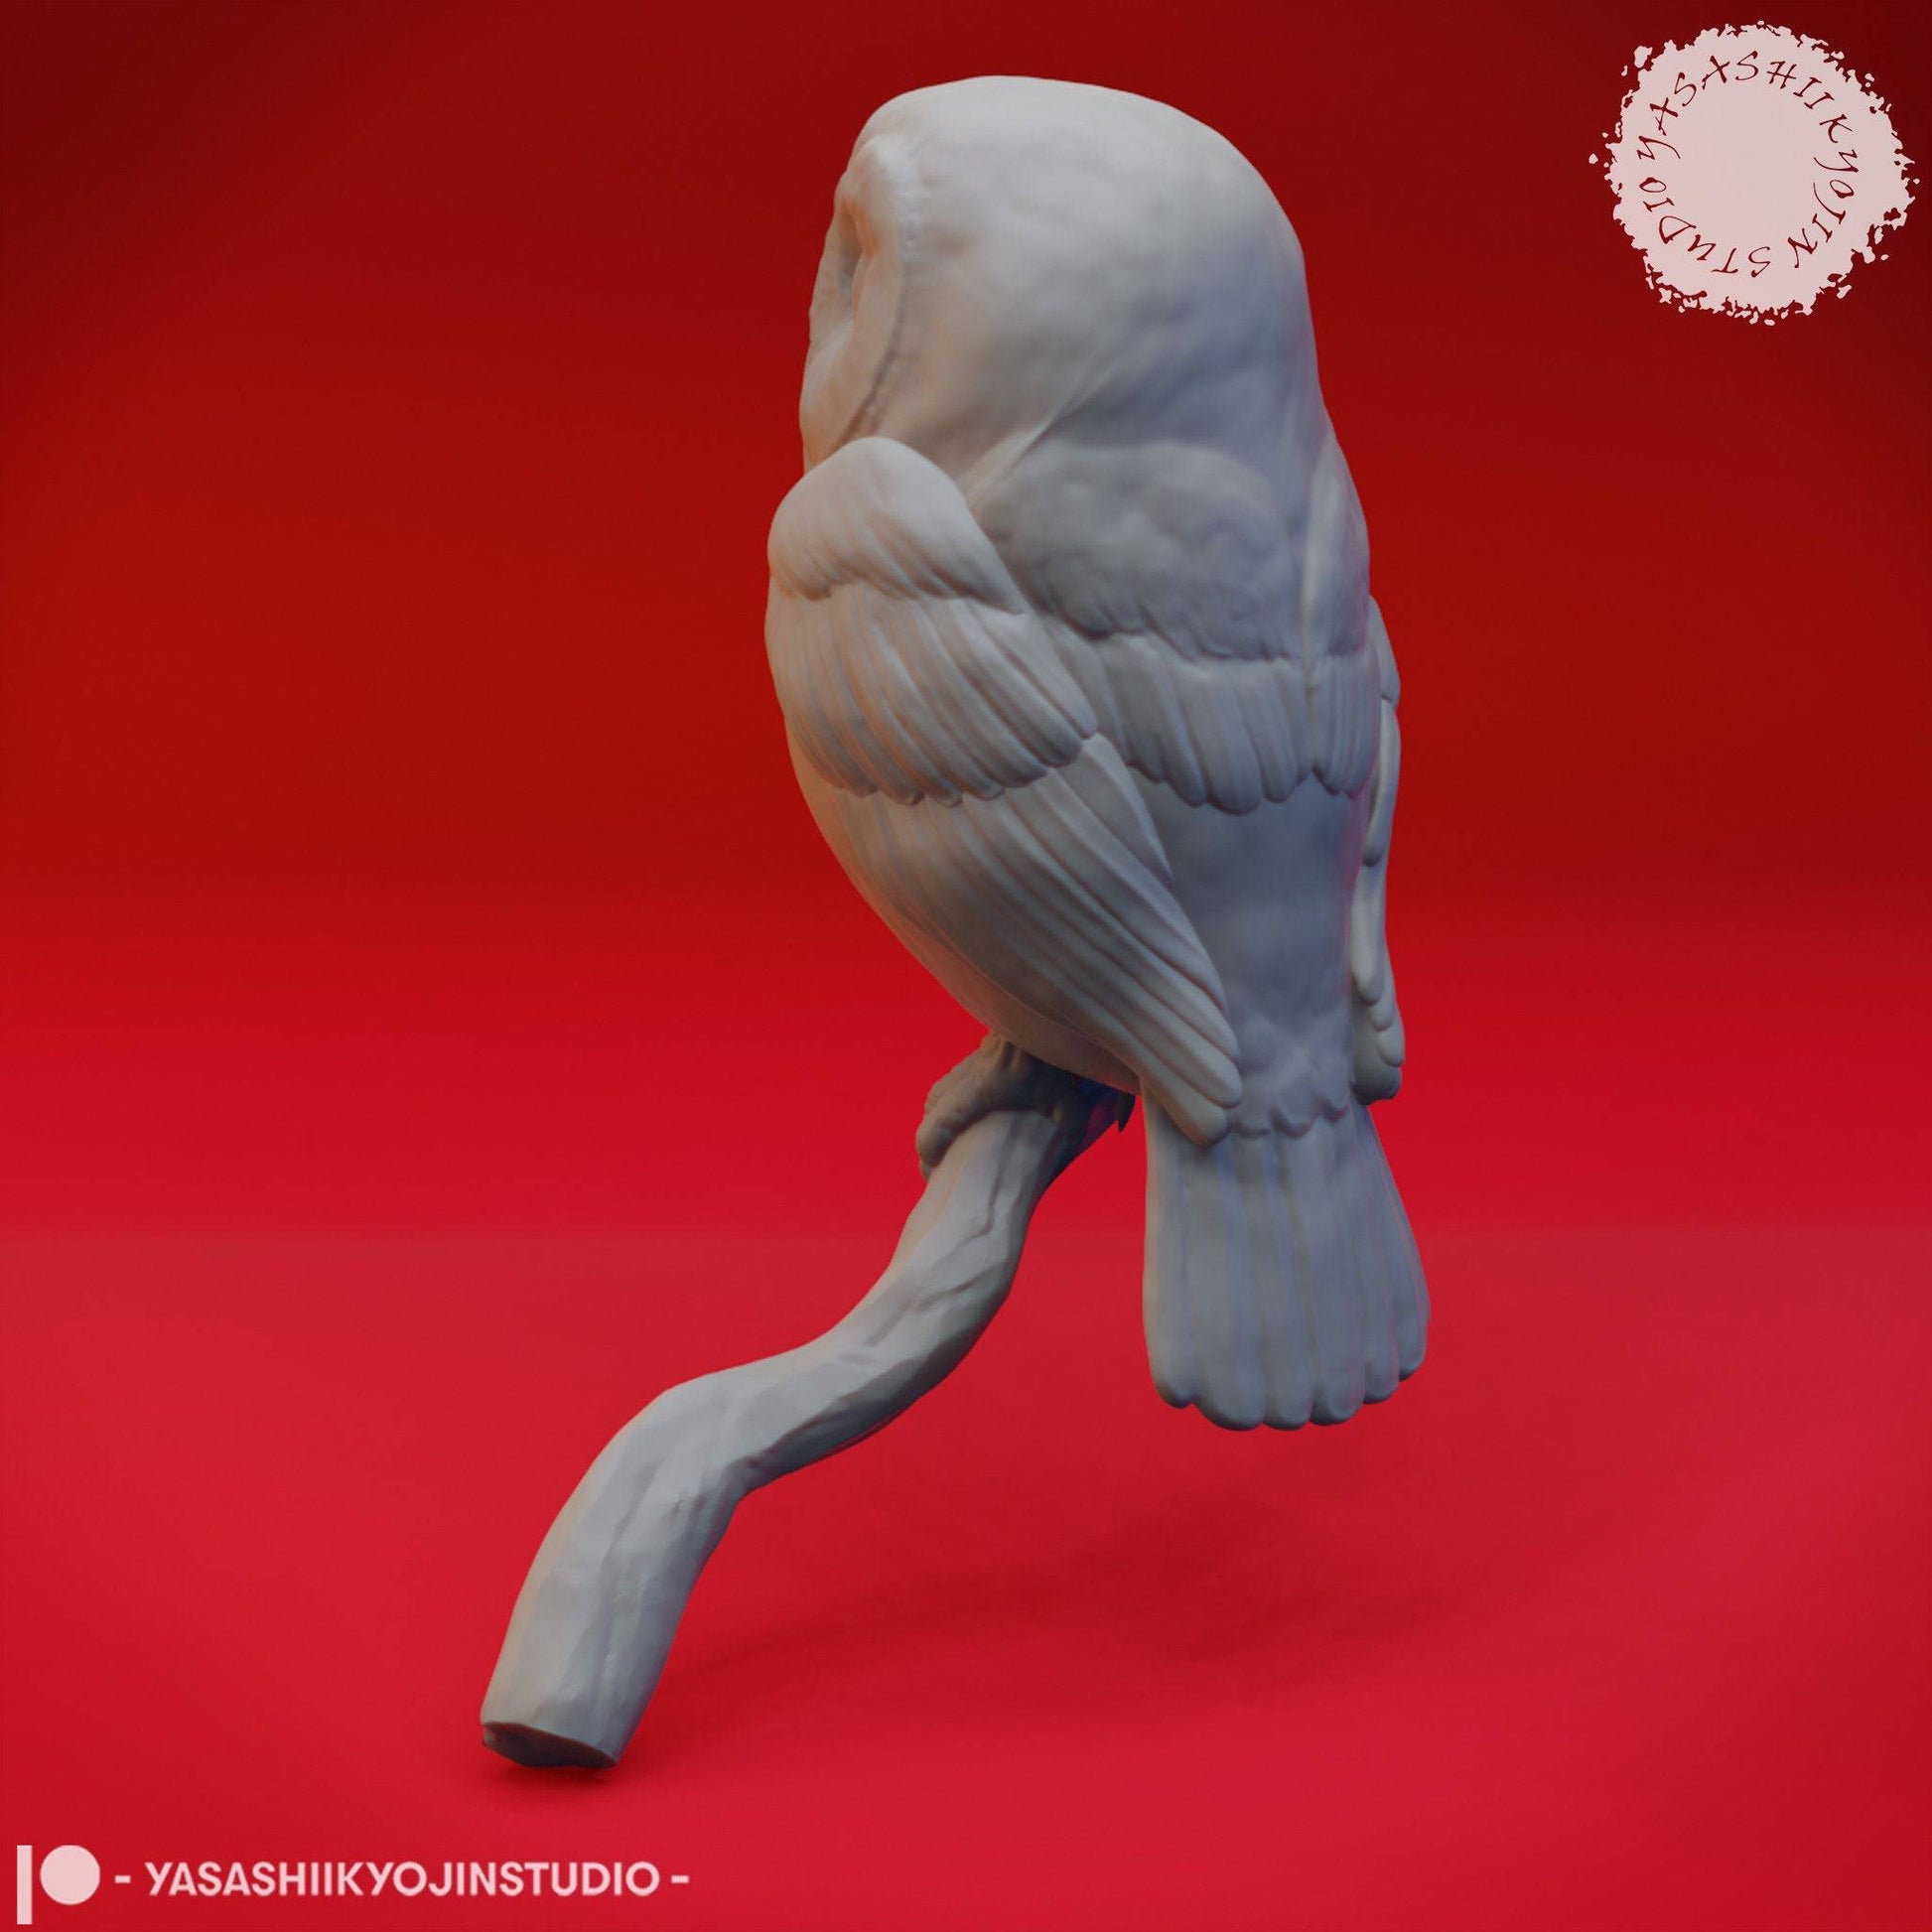 Northern Saw Whet Owl | Miniature Bust | Yasashii Kyojin Studio - Tattles Told 3D